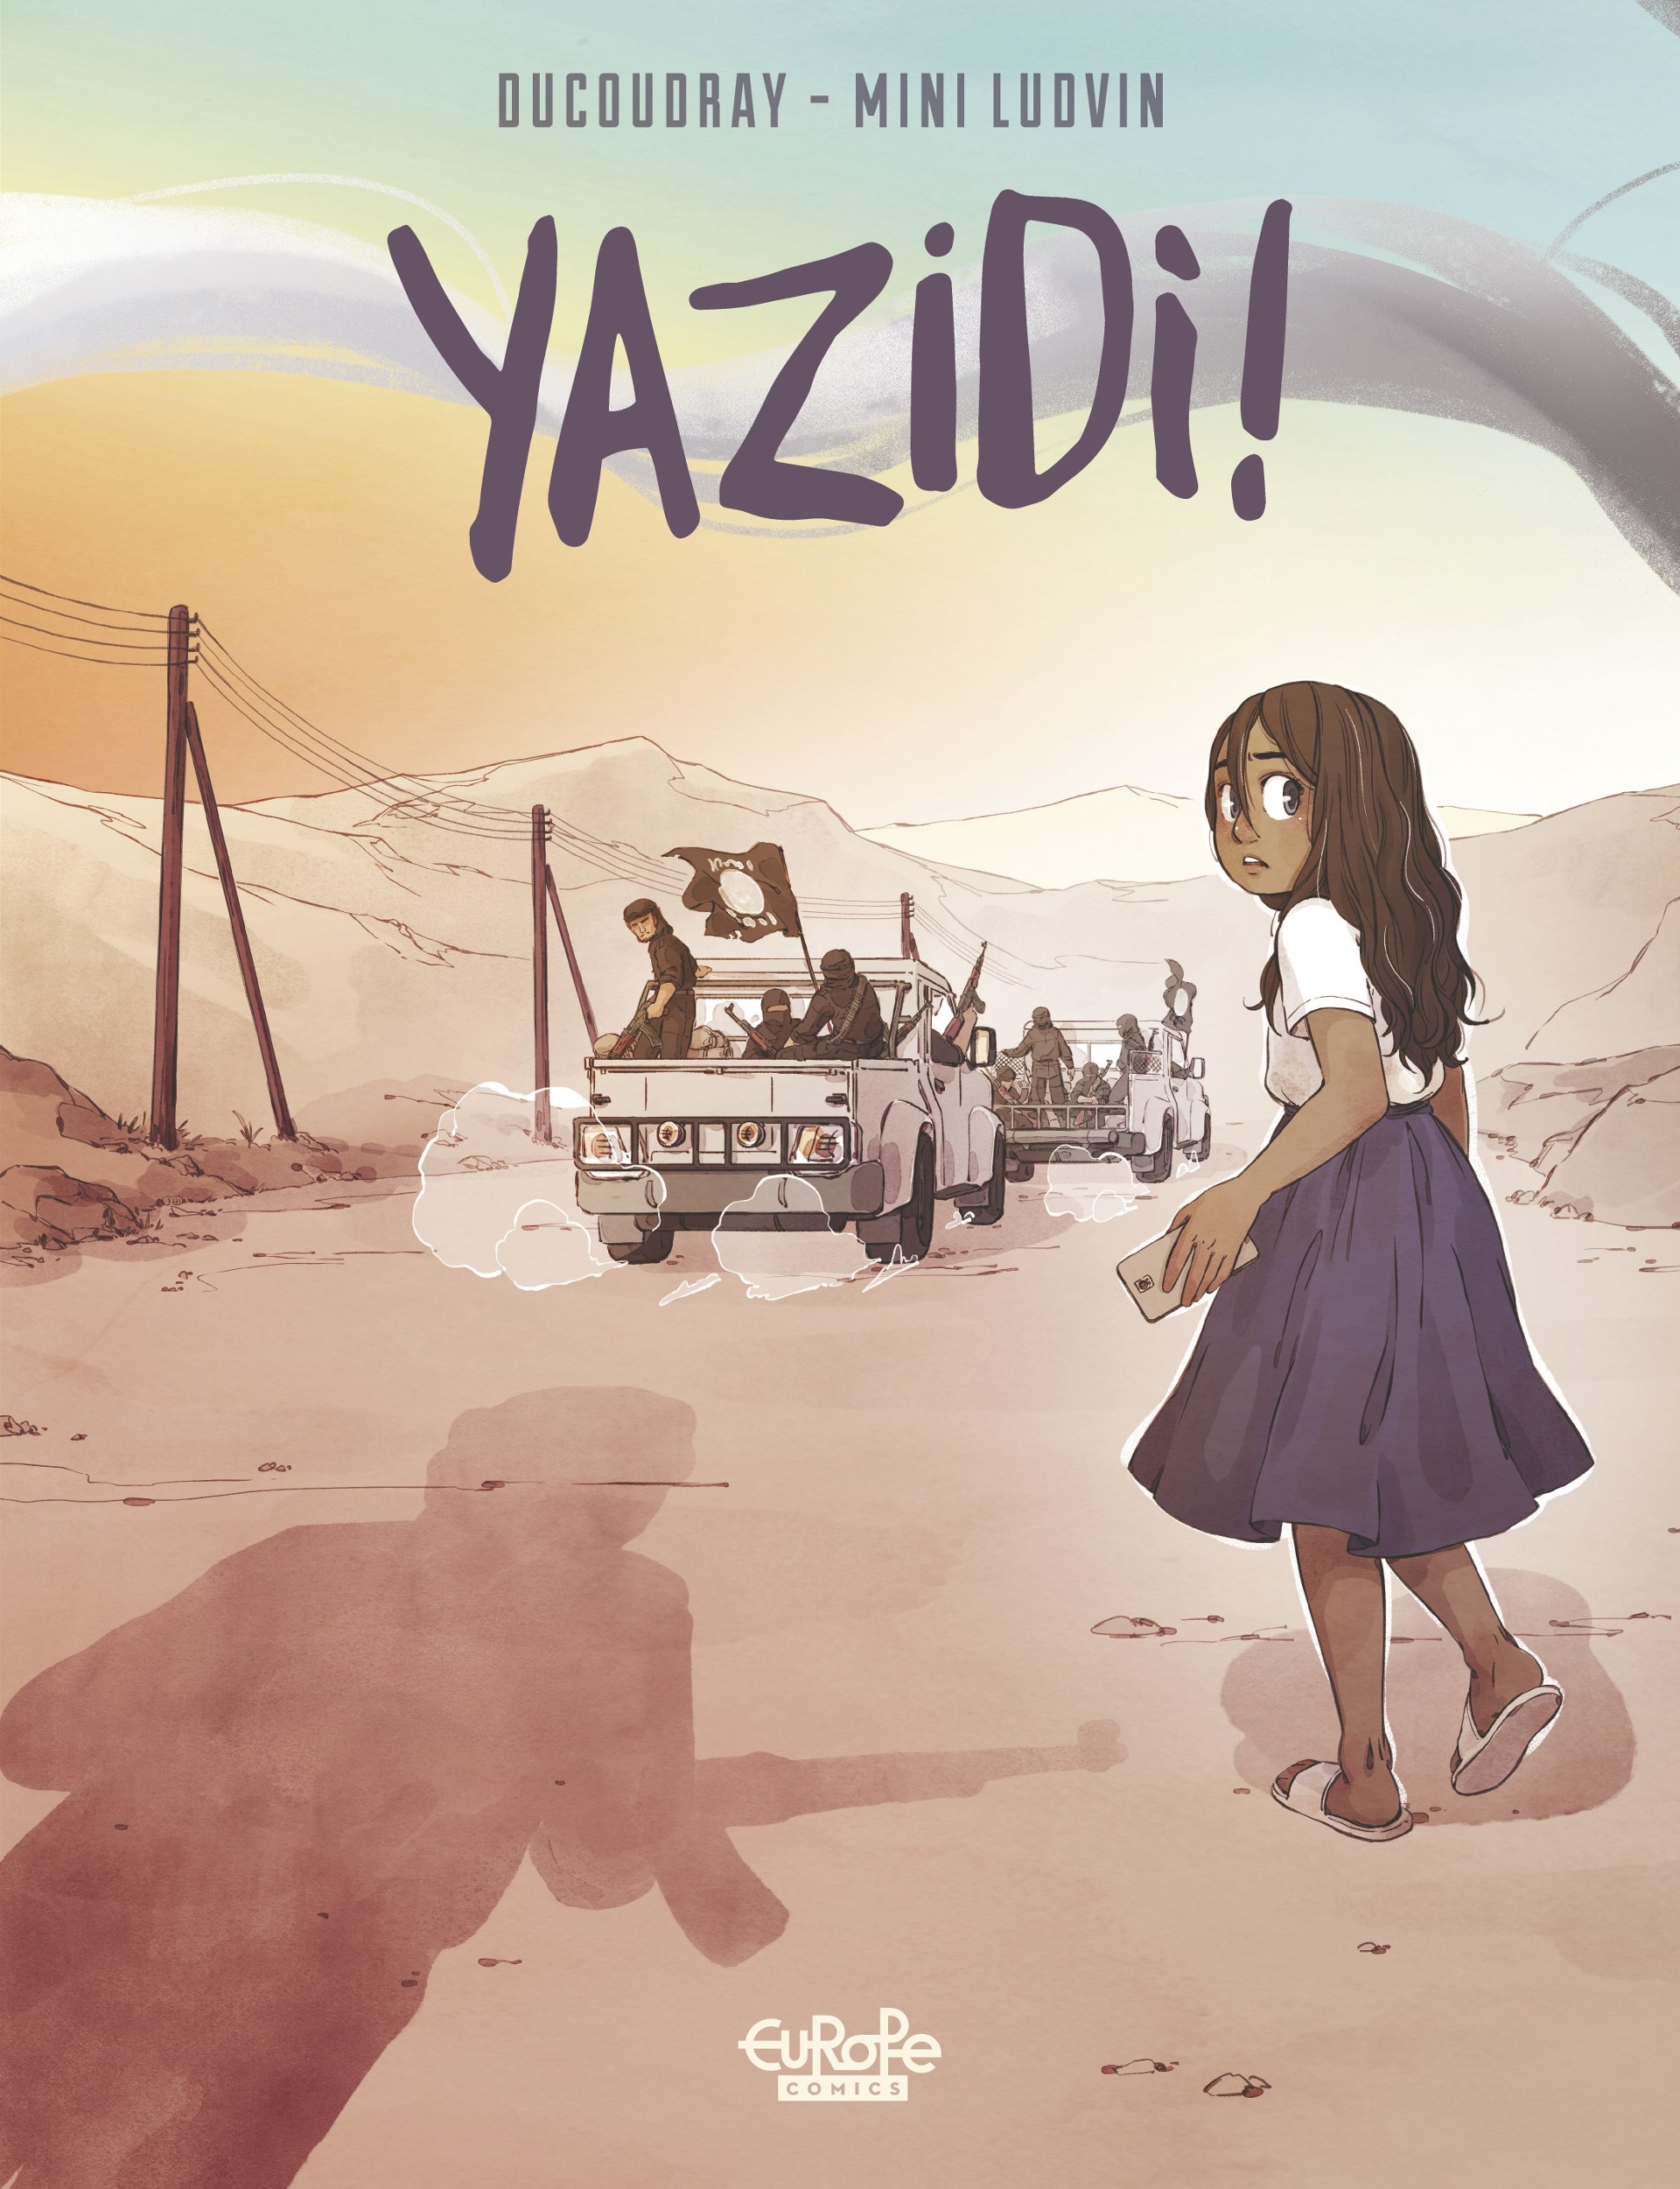 Read online Yazidi! comic -  Issue # TPB - 1